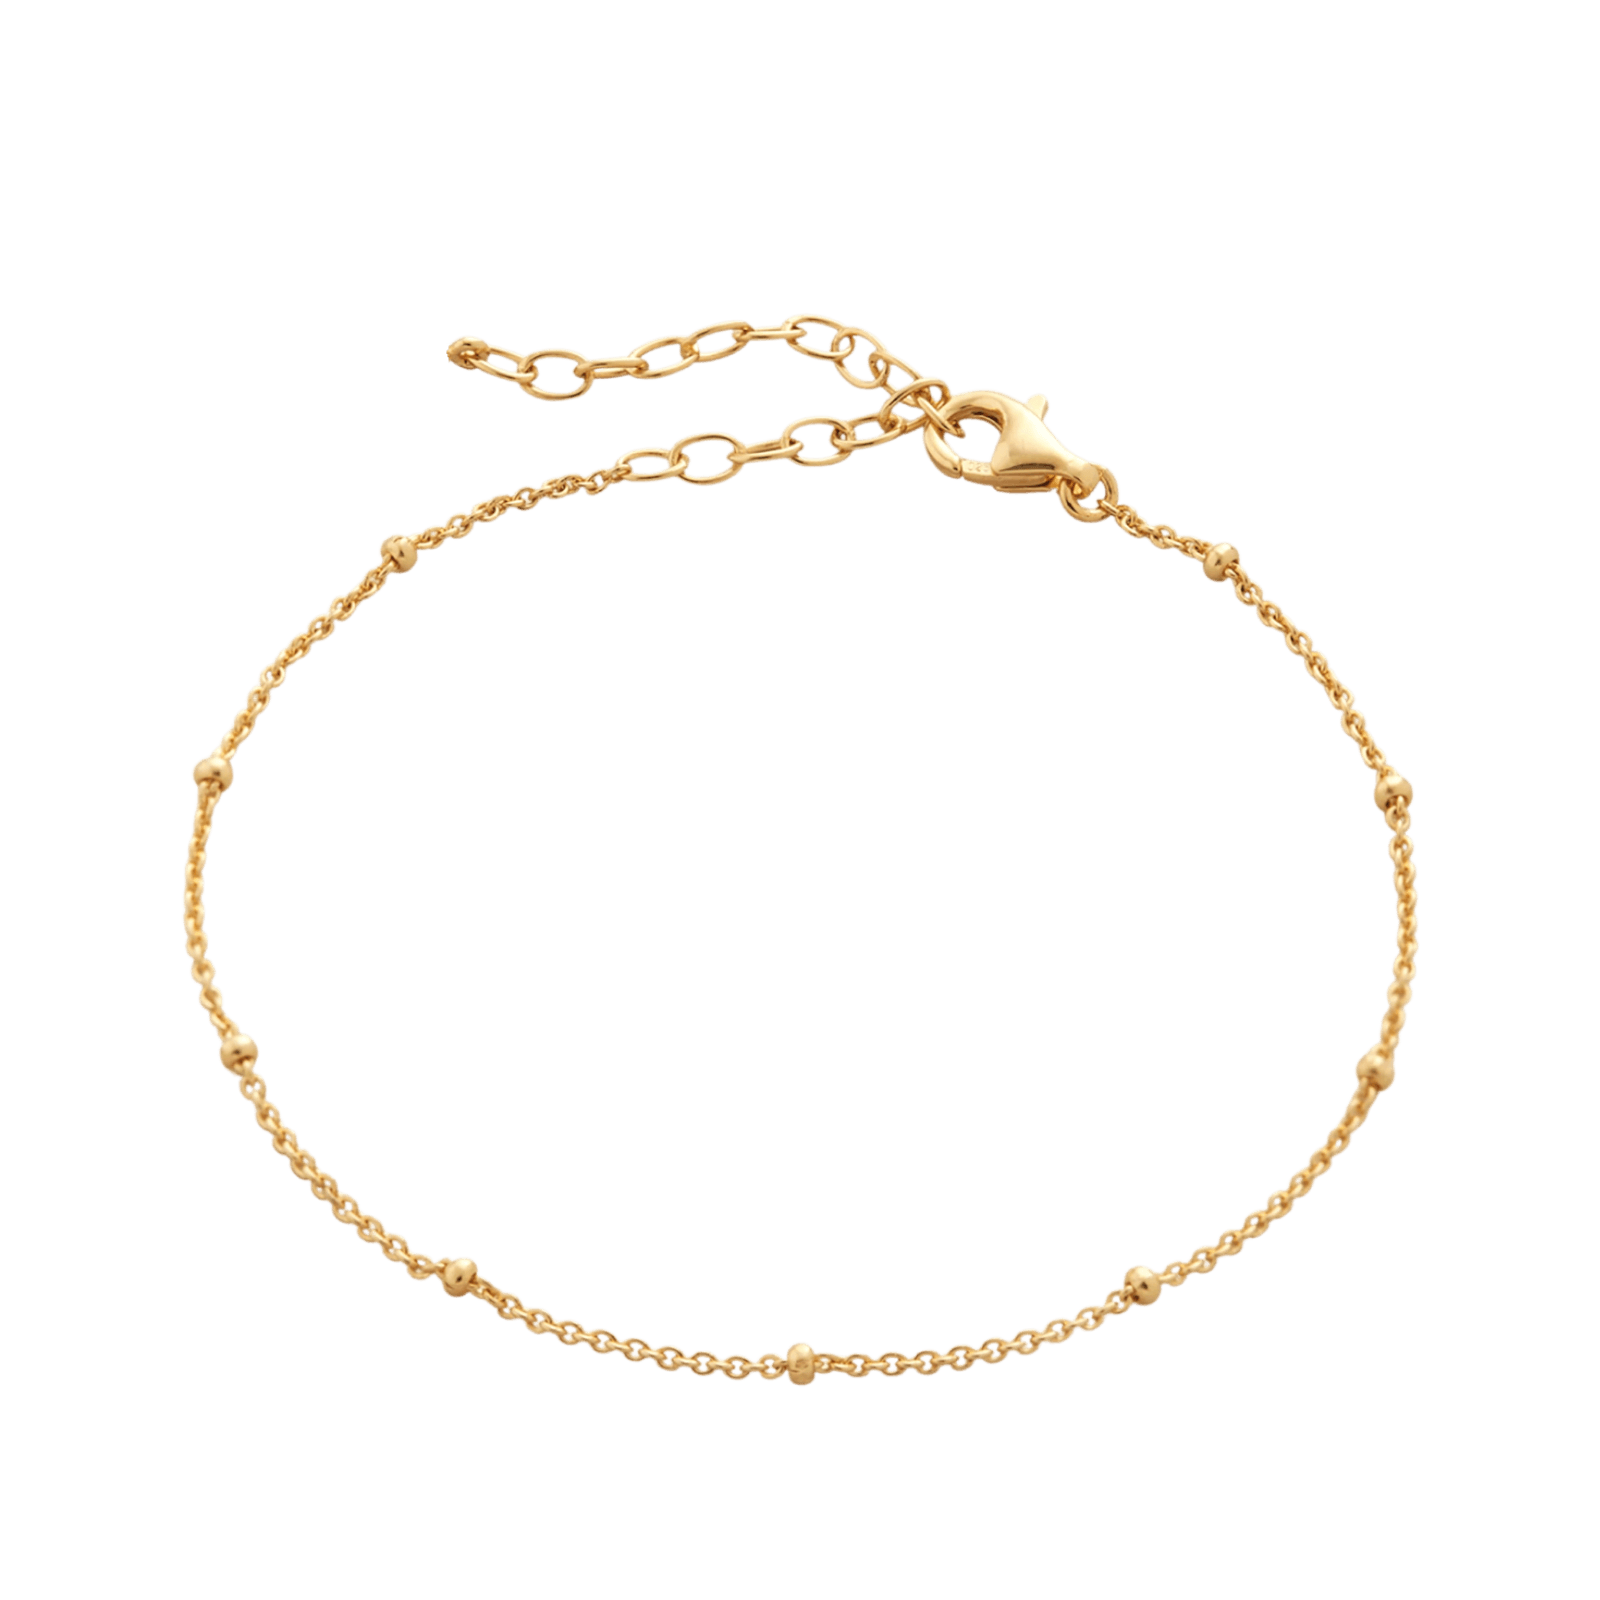 Bead Curb Chain Sterling Silver Adjustable Bracelet - Spero London